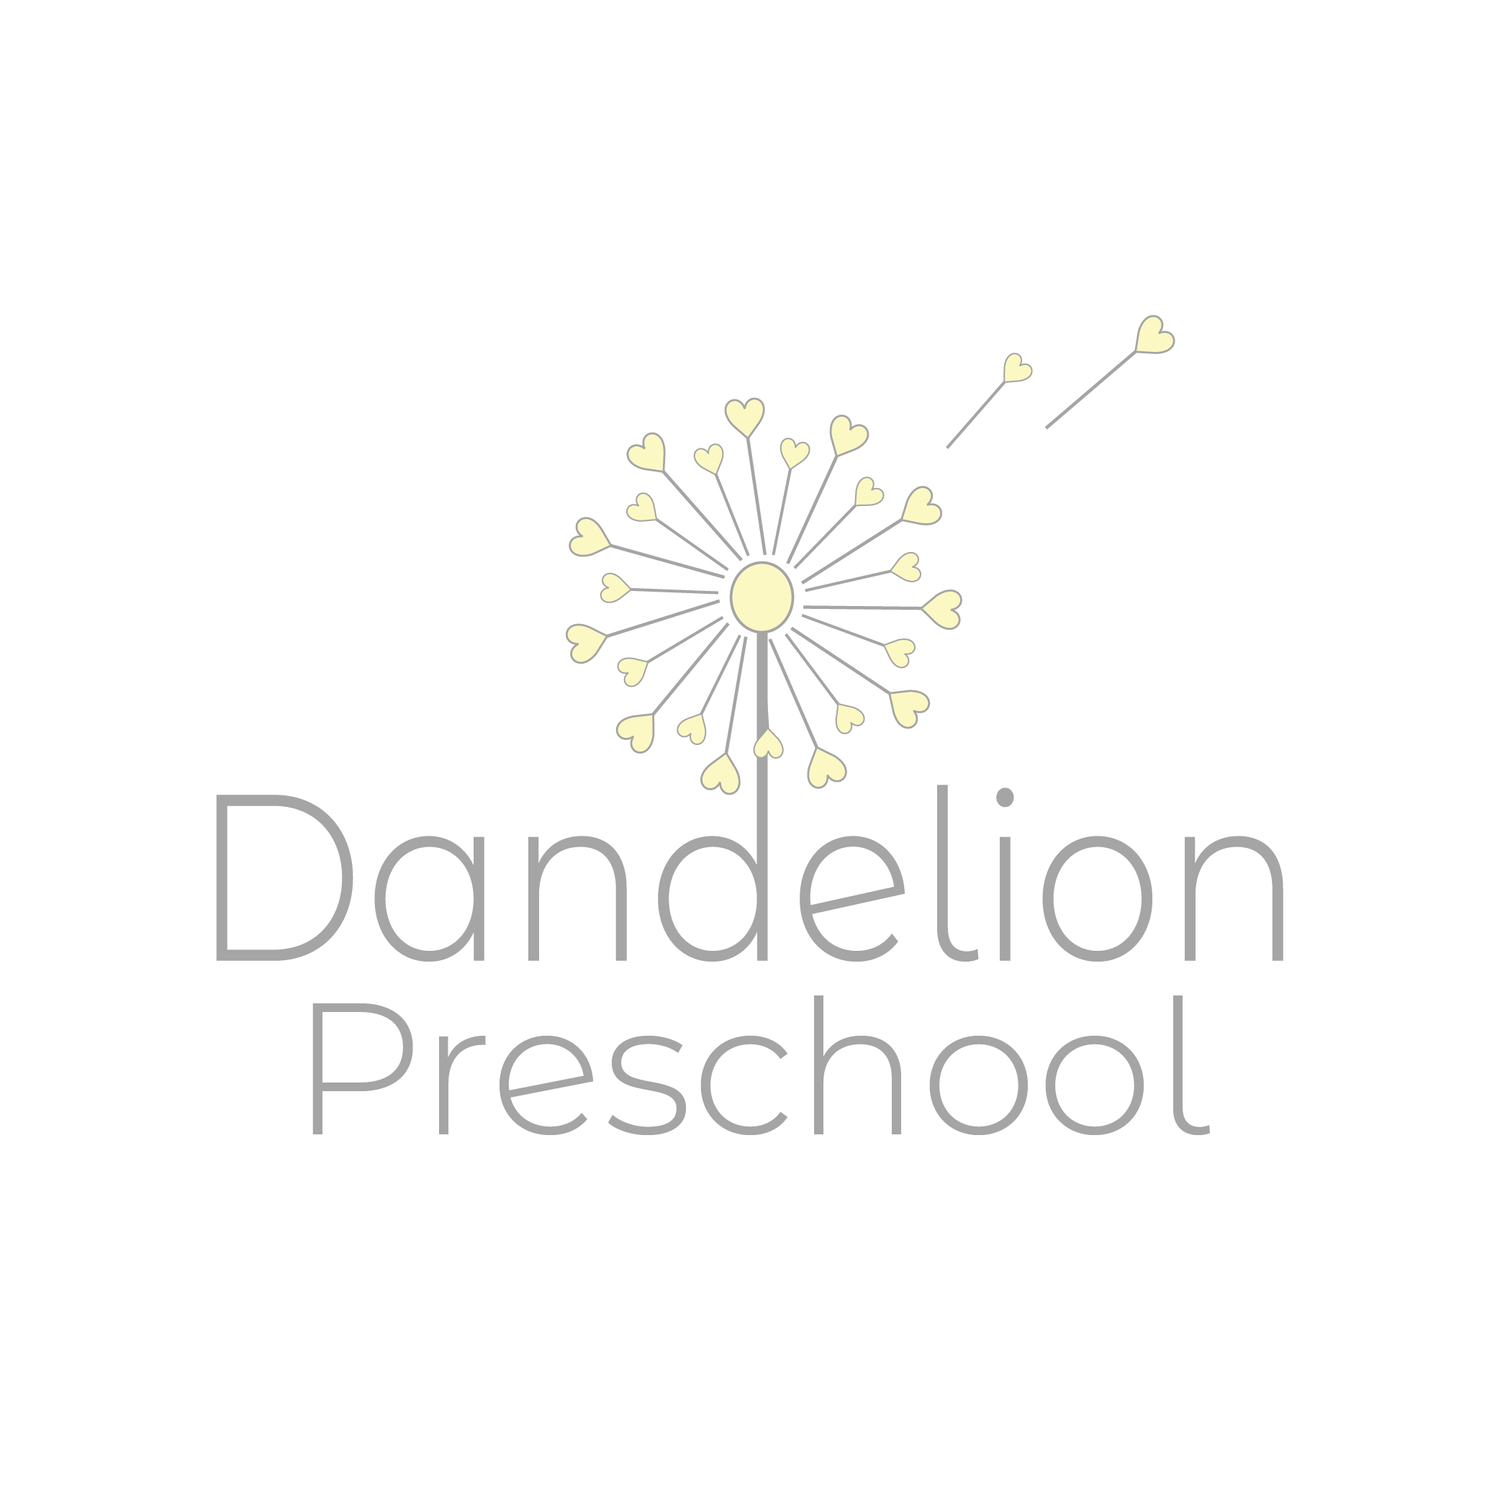 Dandelion Preschool